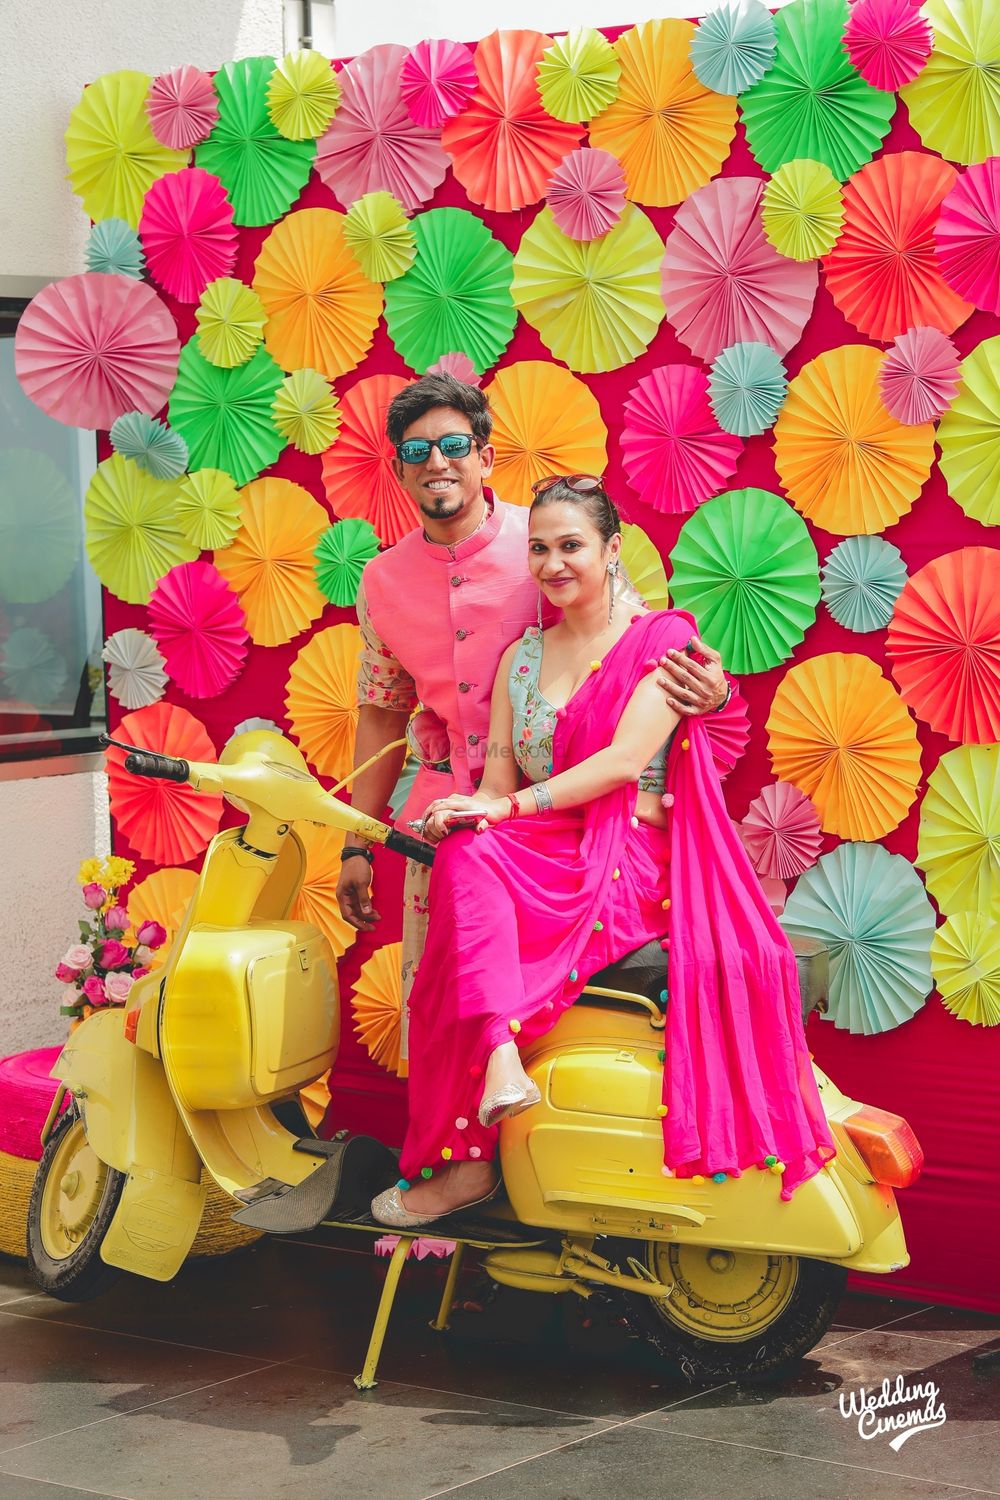 Photo From The best destination wedding in Kerala - By Weddingcinemas